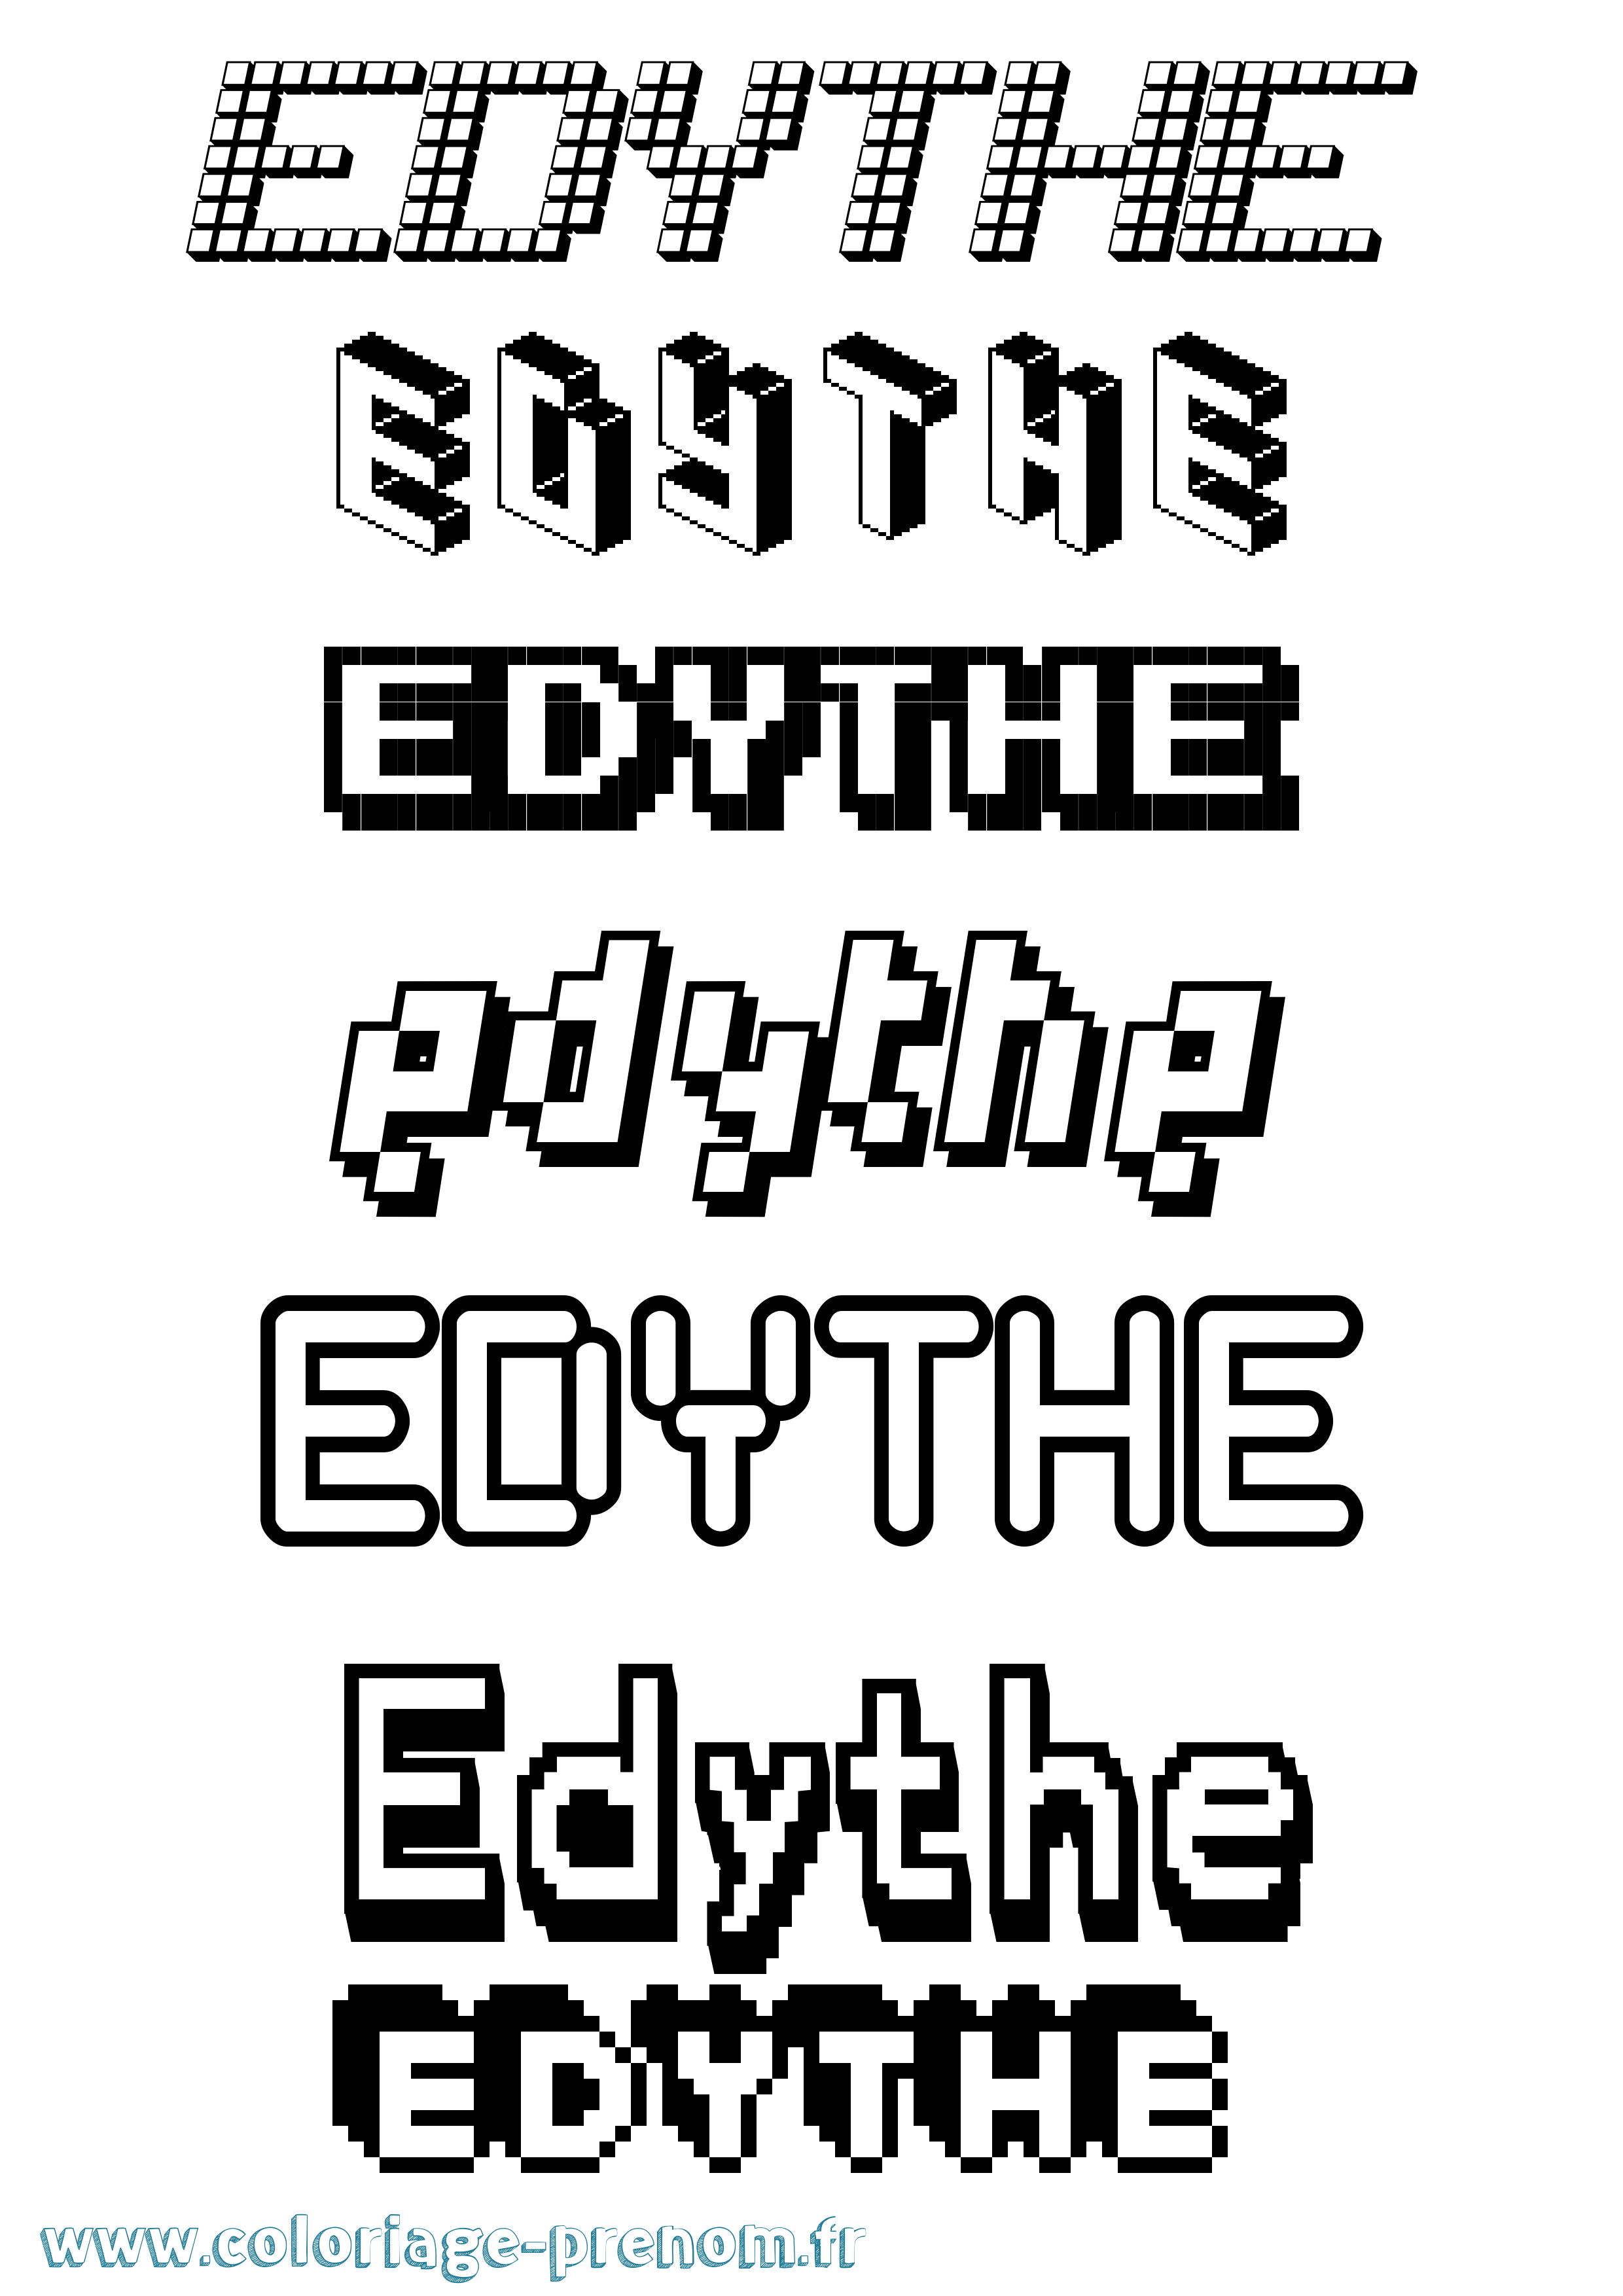 Coloriage prénom Edythe Pixel